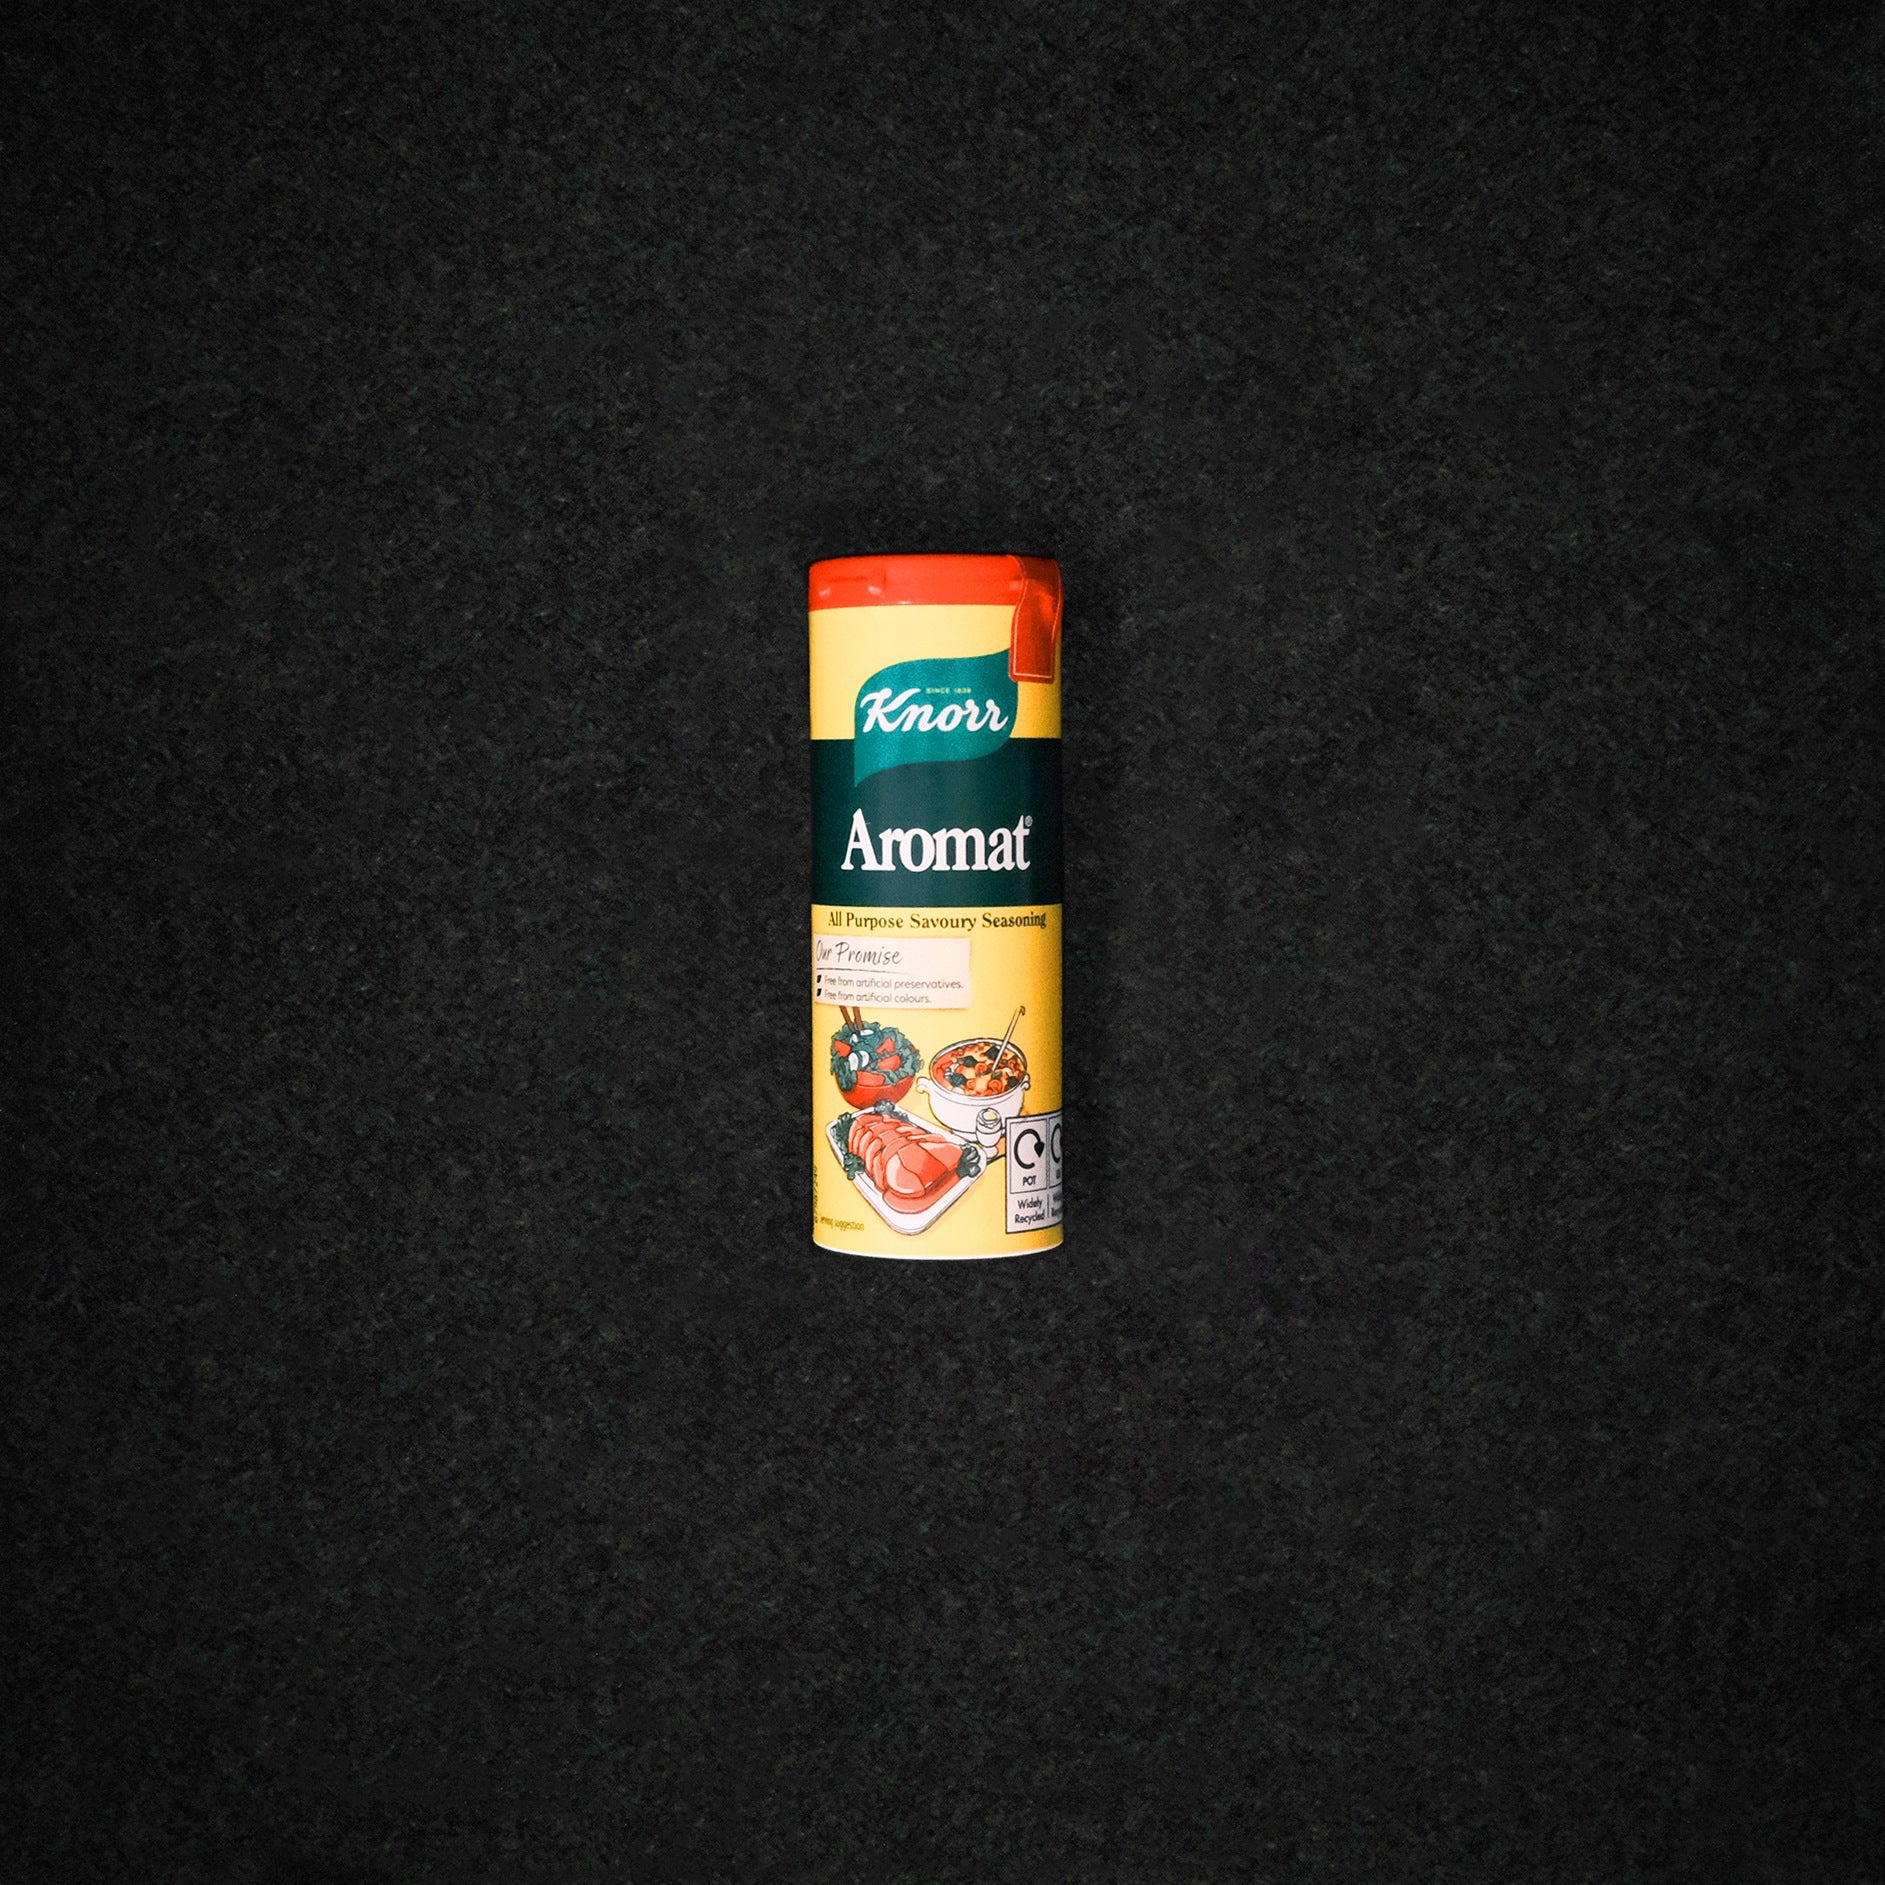 Knorr - Aromat Original Seasoning – Savant